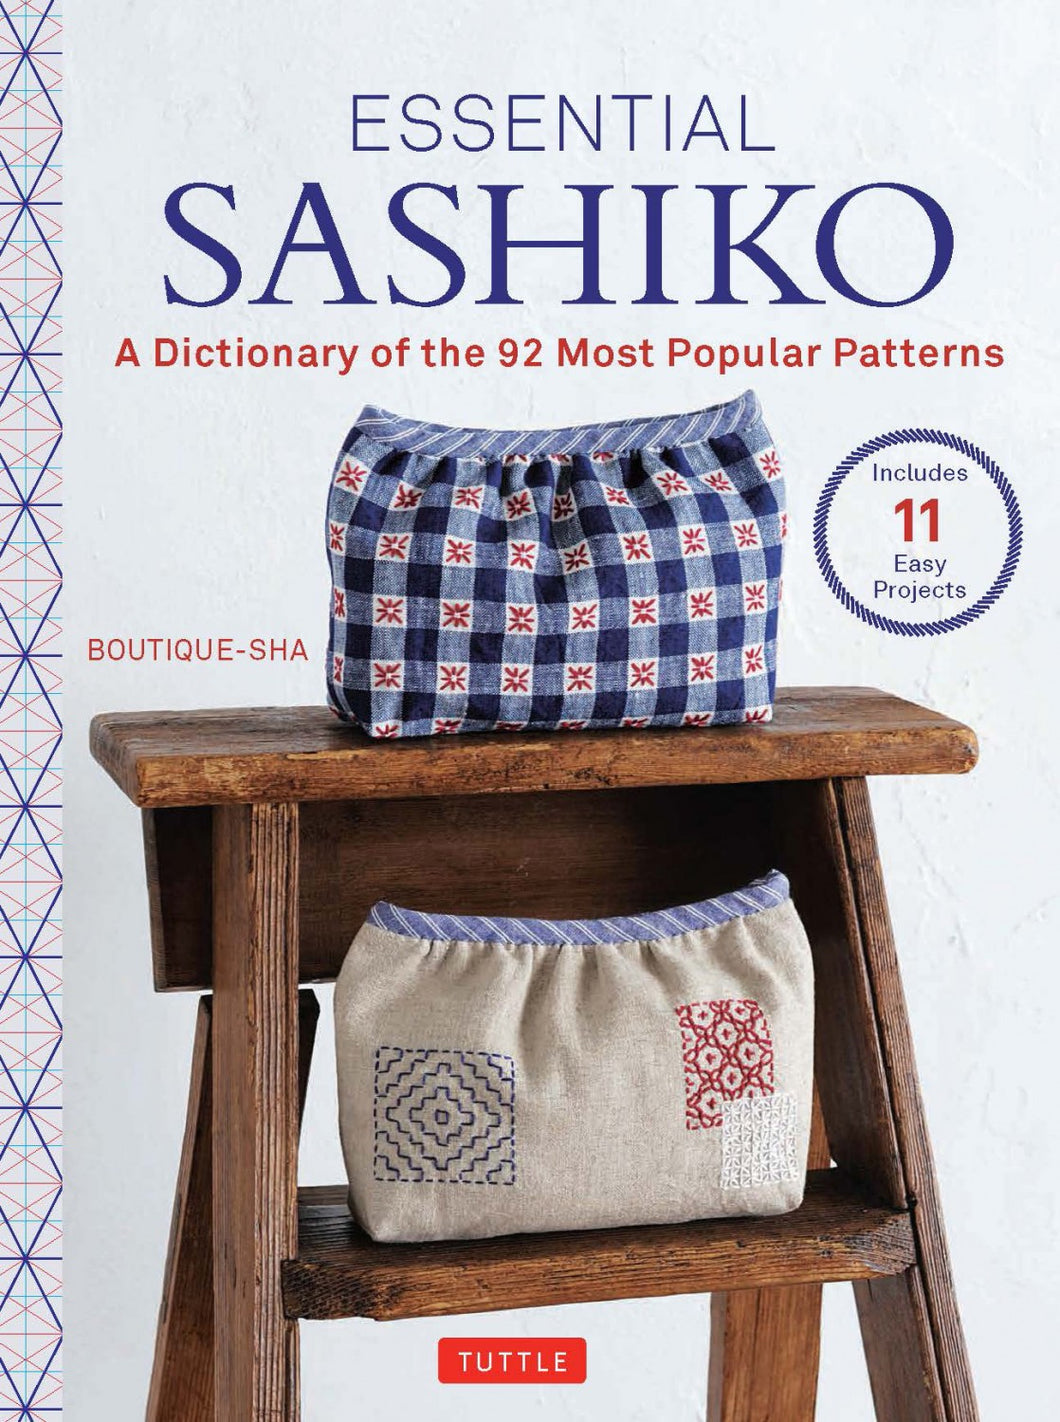 Essential Sashiko